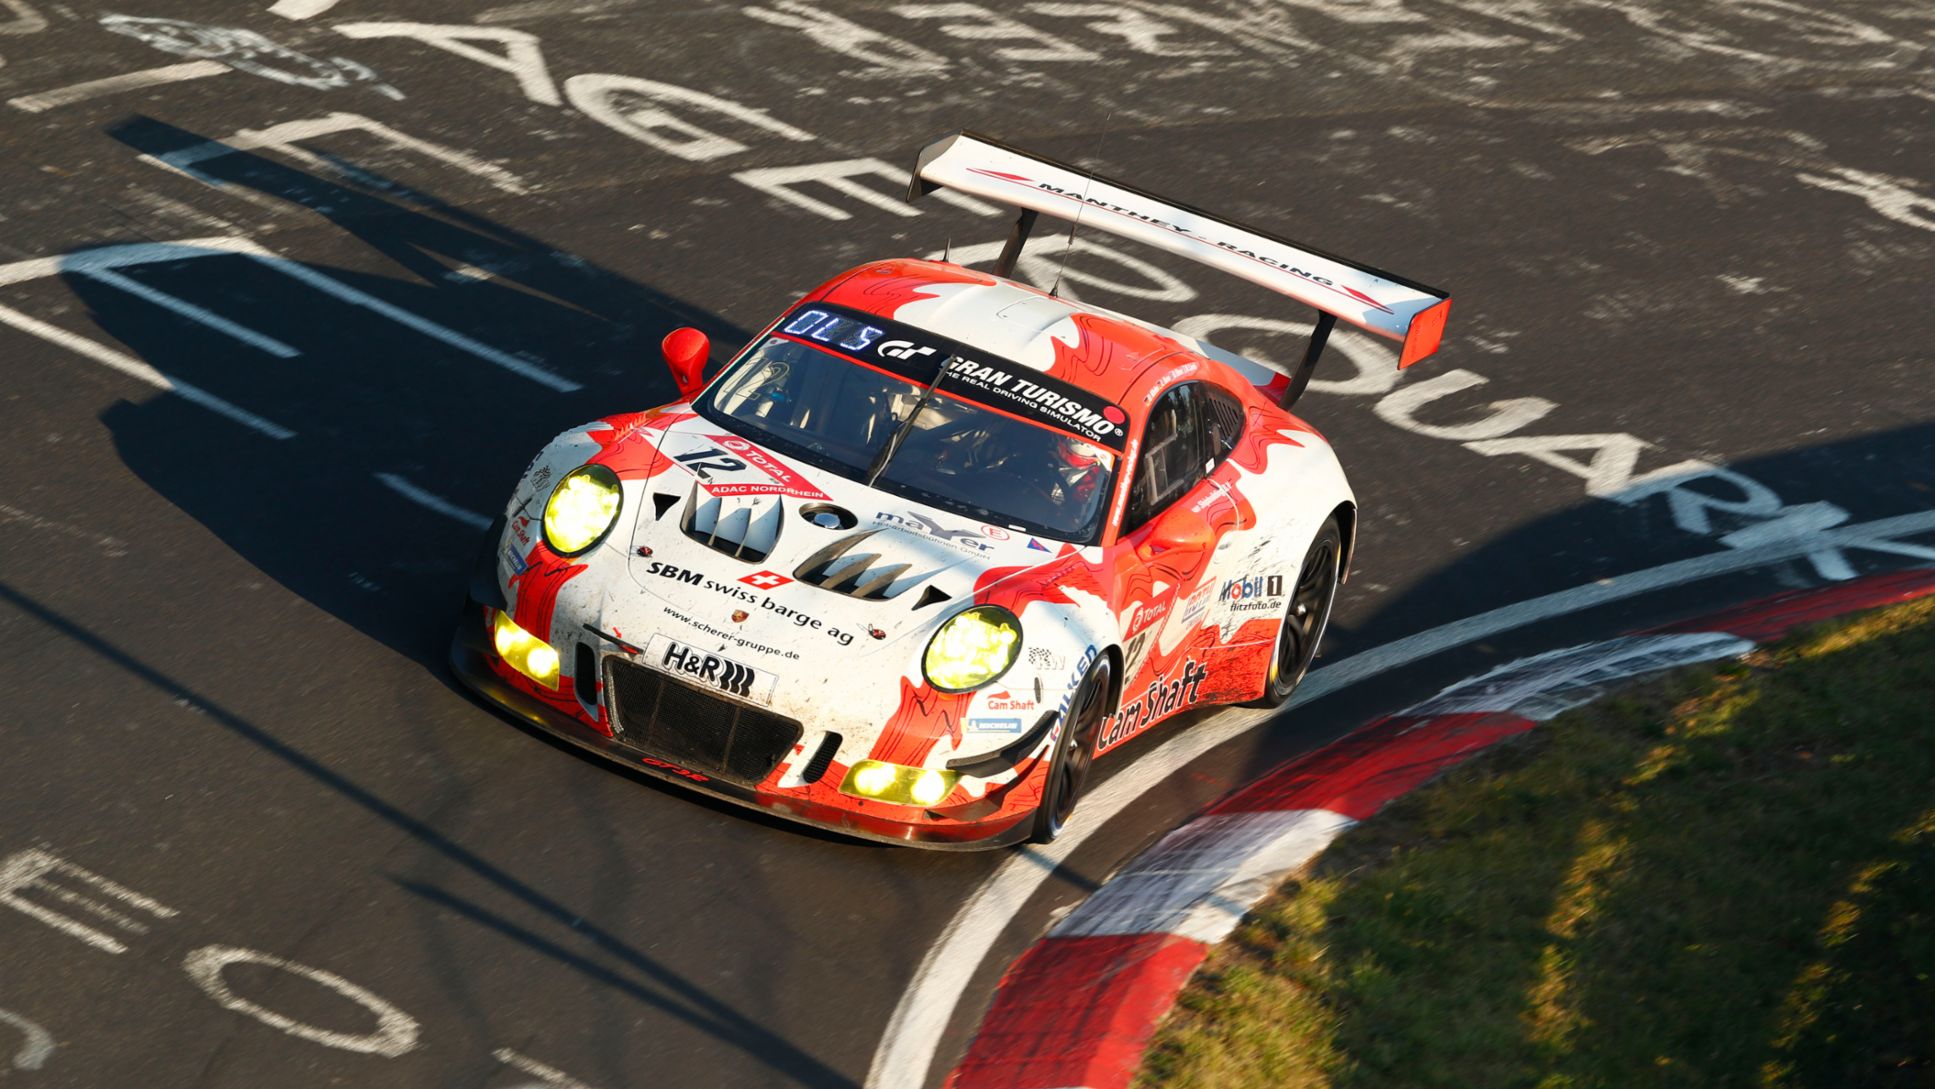 Porsche 911 GT3 R, Manthey-Racing (12), 24h Nürburgring, race, 2019, Porsche AG